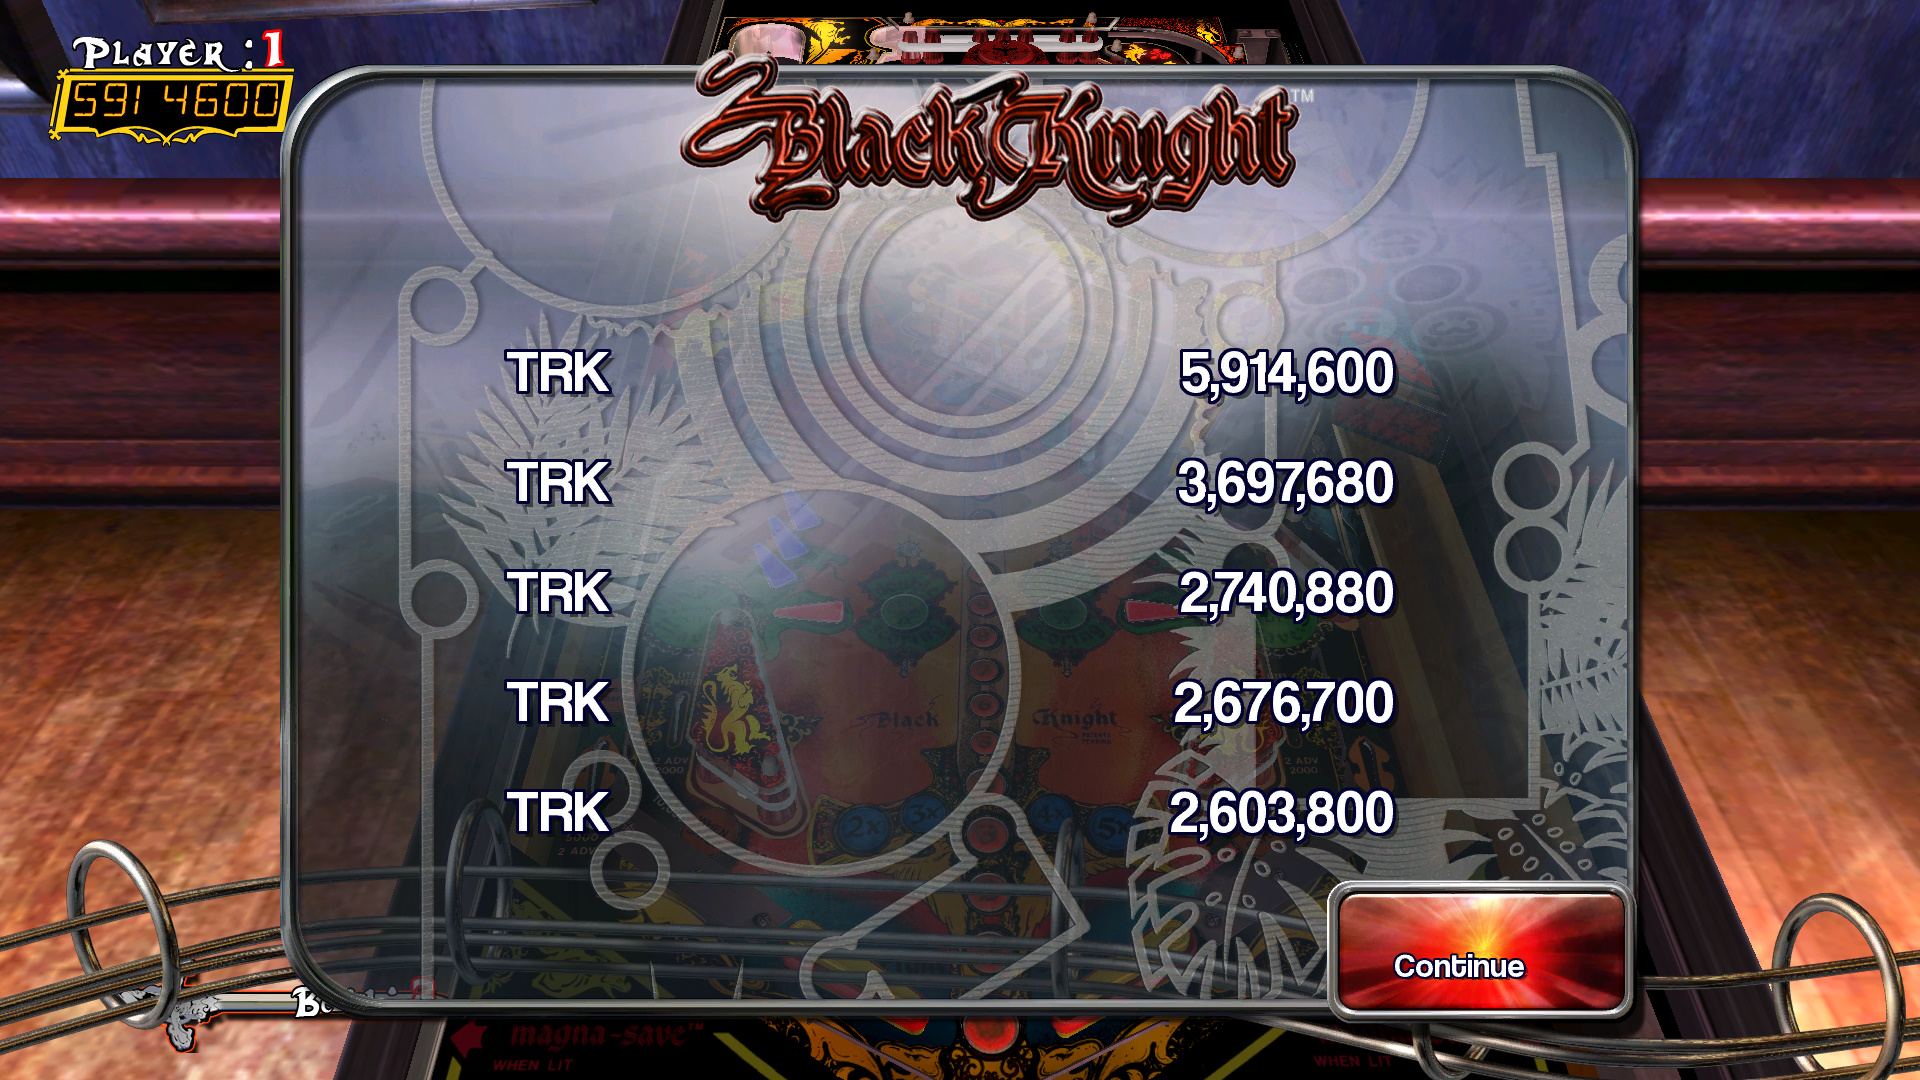 TheTrickster: Pinball Arcade: Black Knight (PC) 5,914,600 points on 2015-09-12 20:45:55